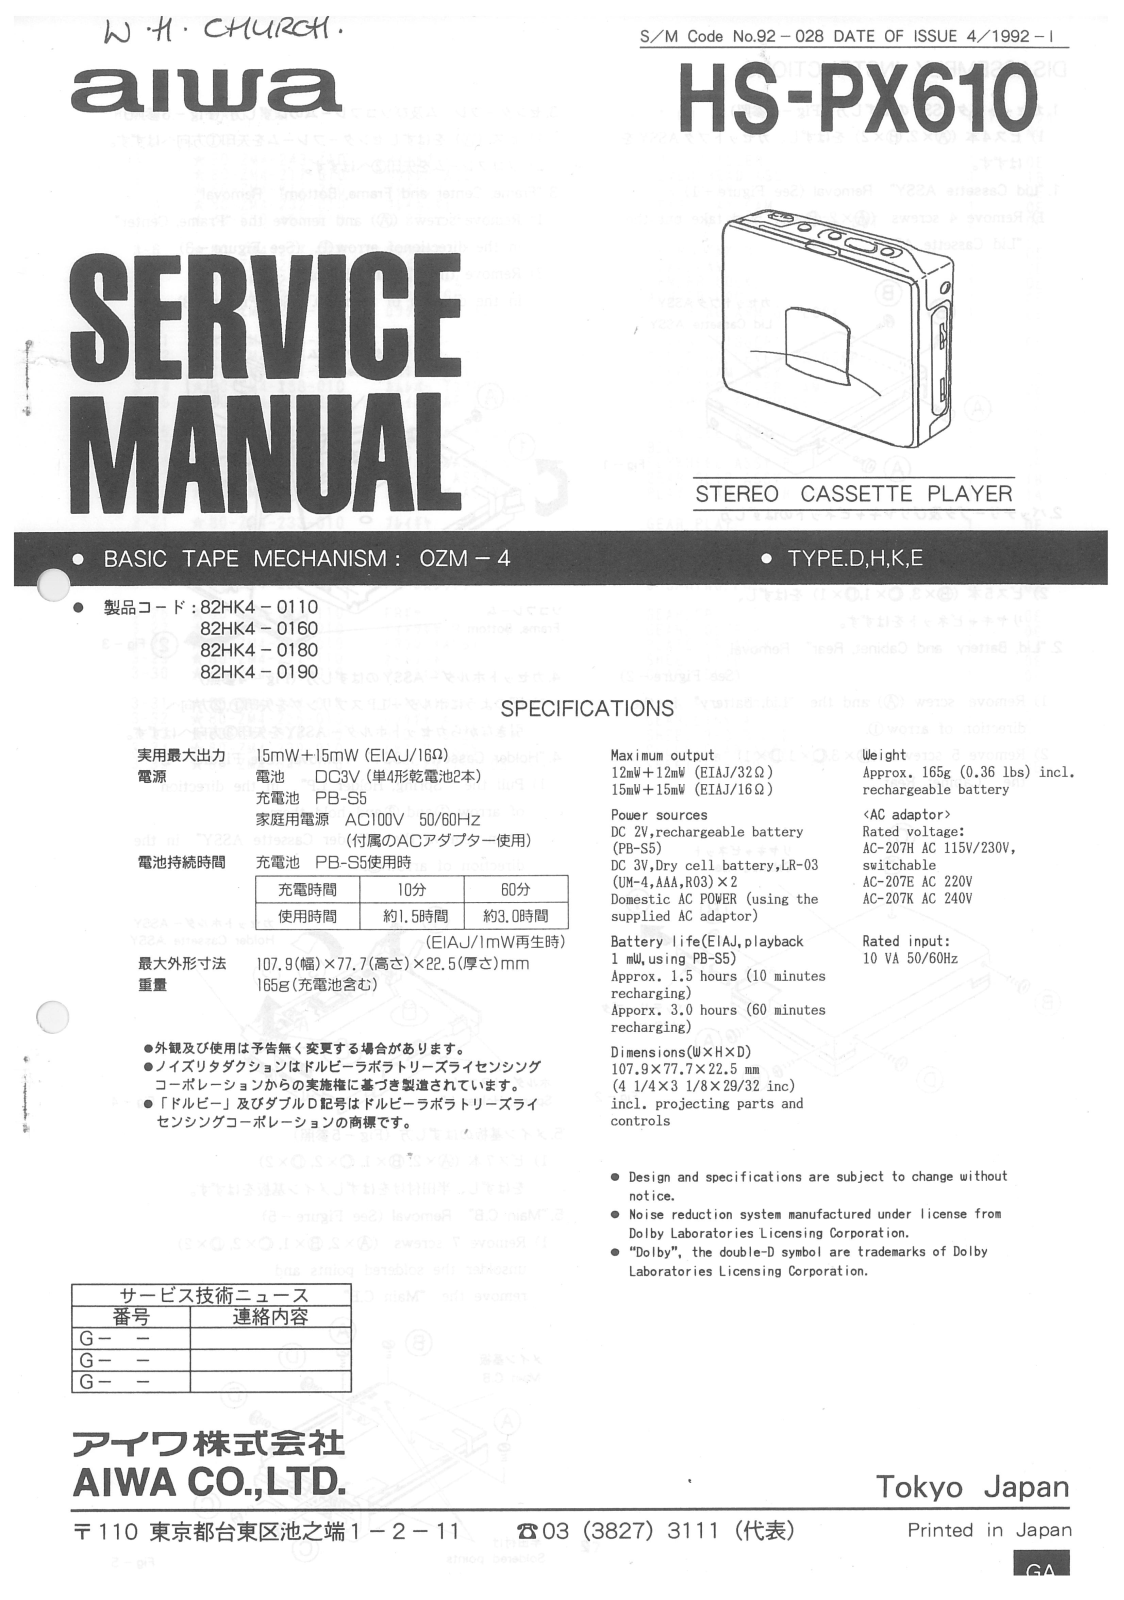 Aiwa HS-PX610 User Manual